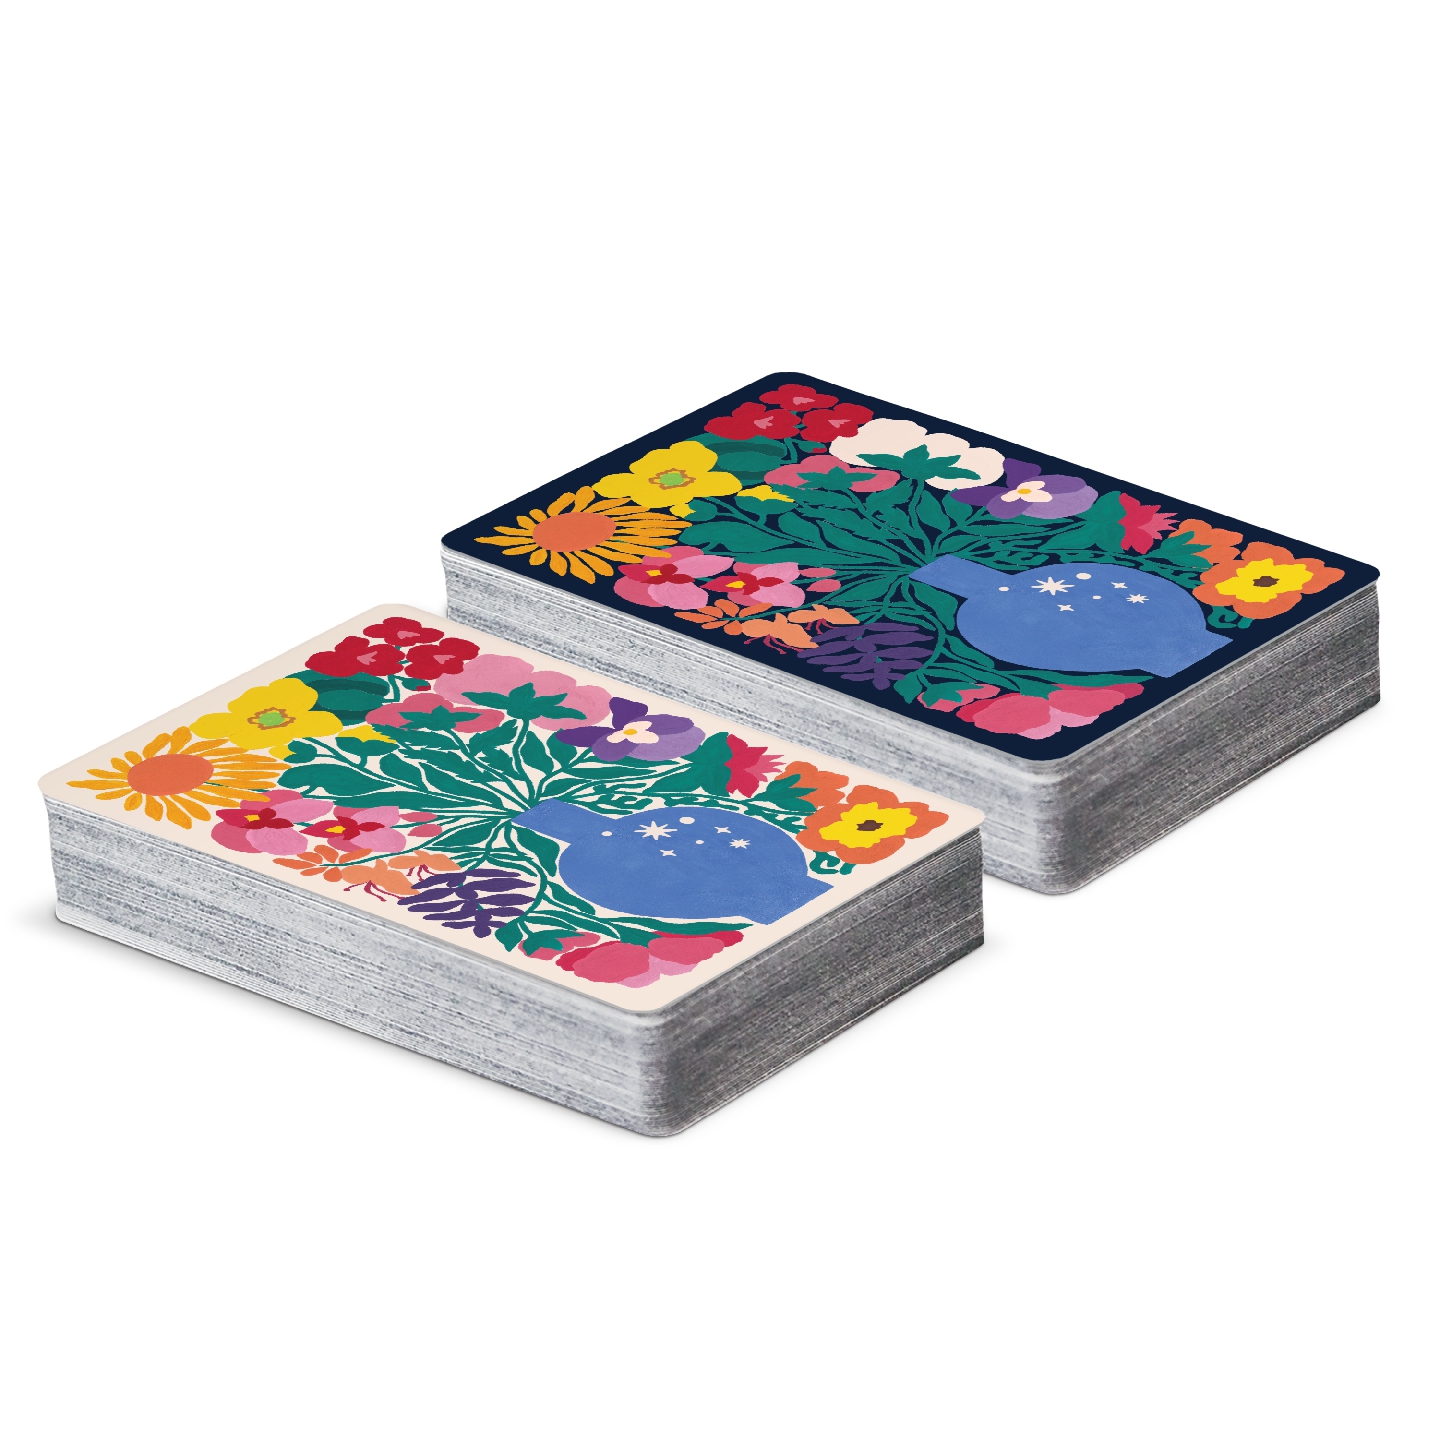 Zodiac Flowers Playing Card Set